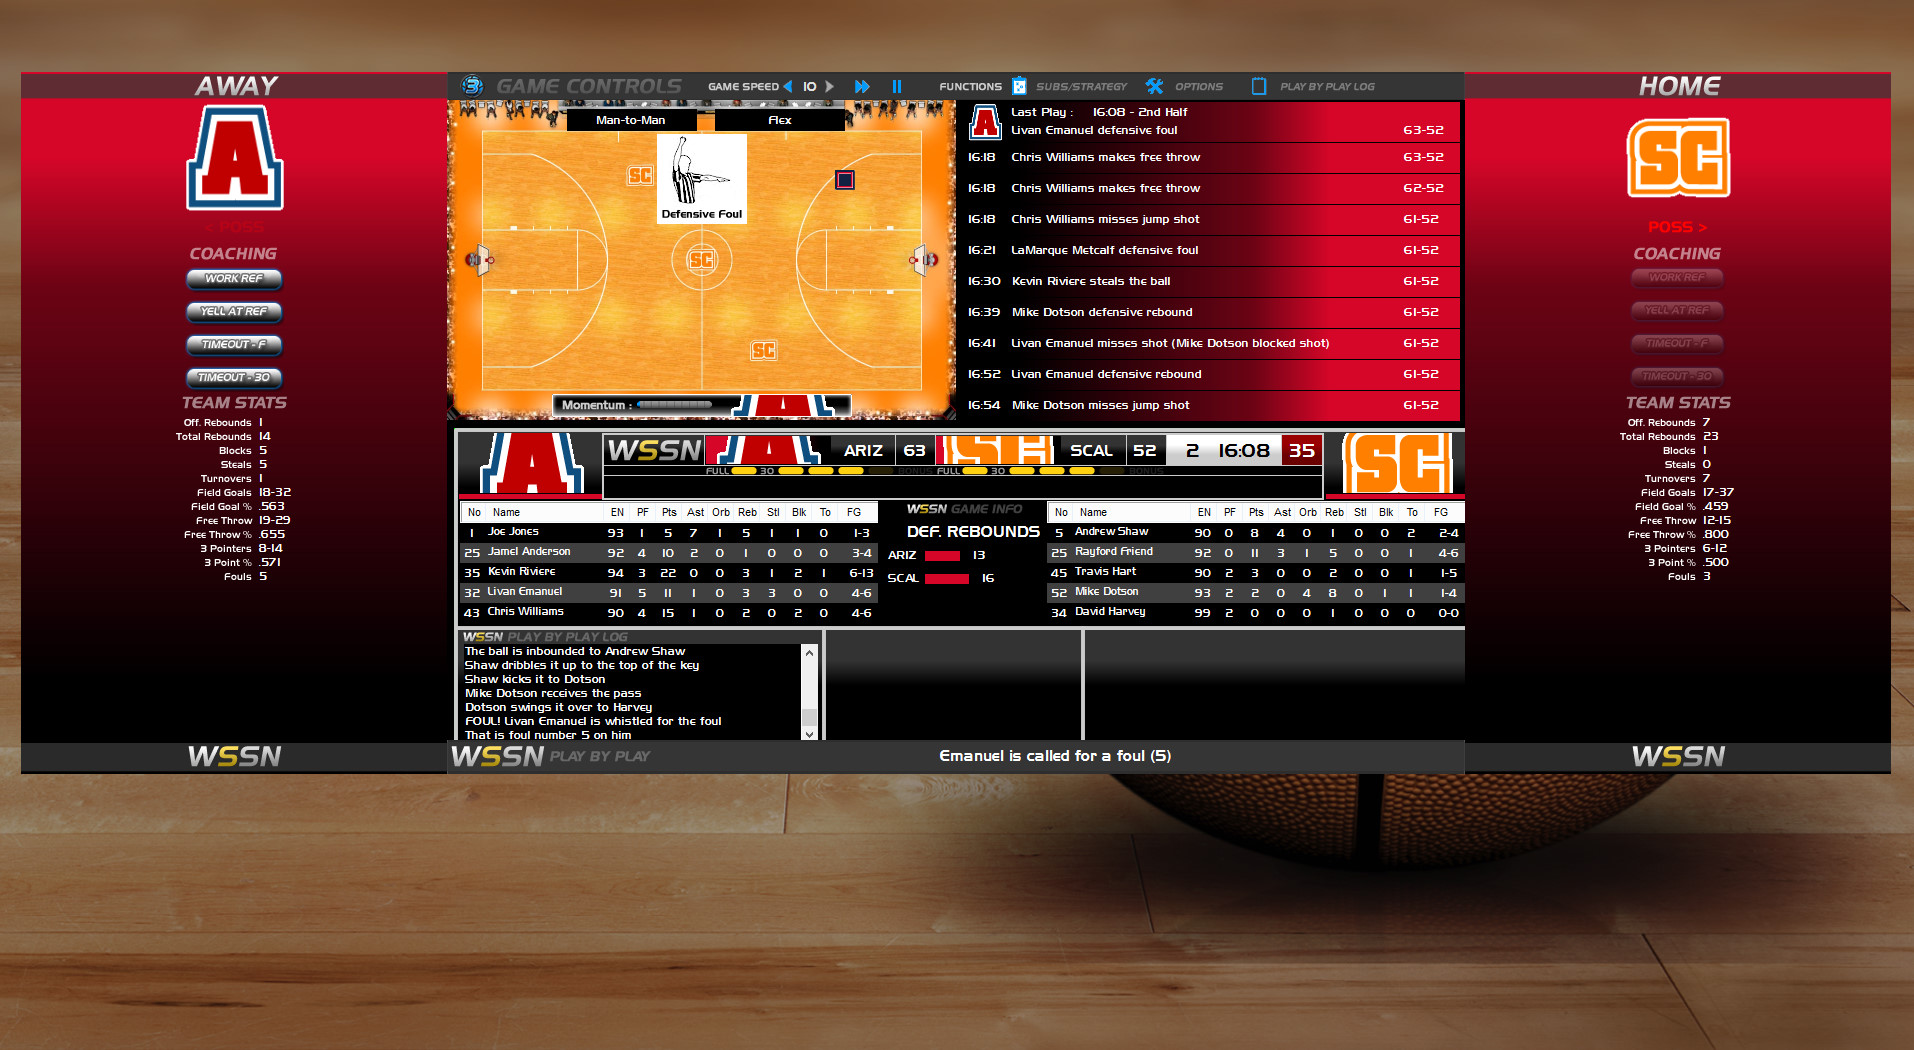 Draft Day Sports College Basketball 3 screenshot